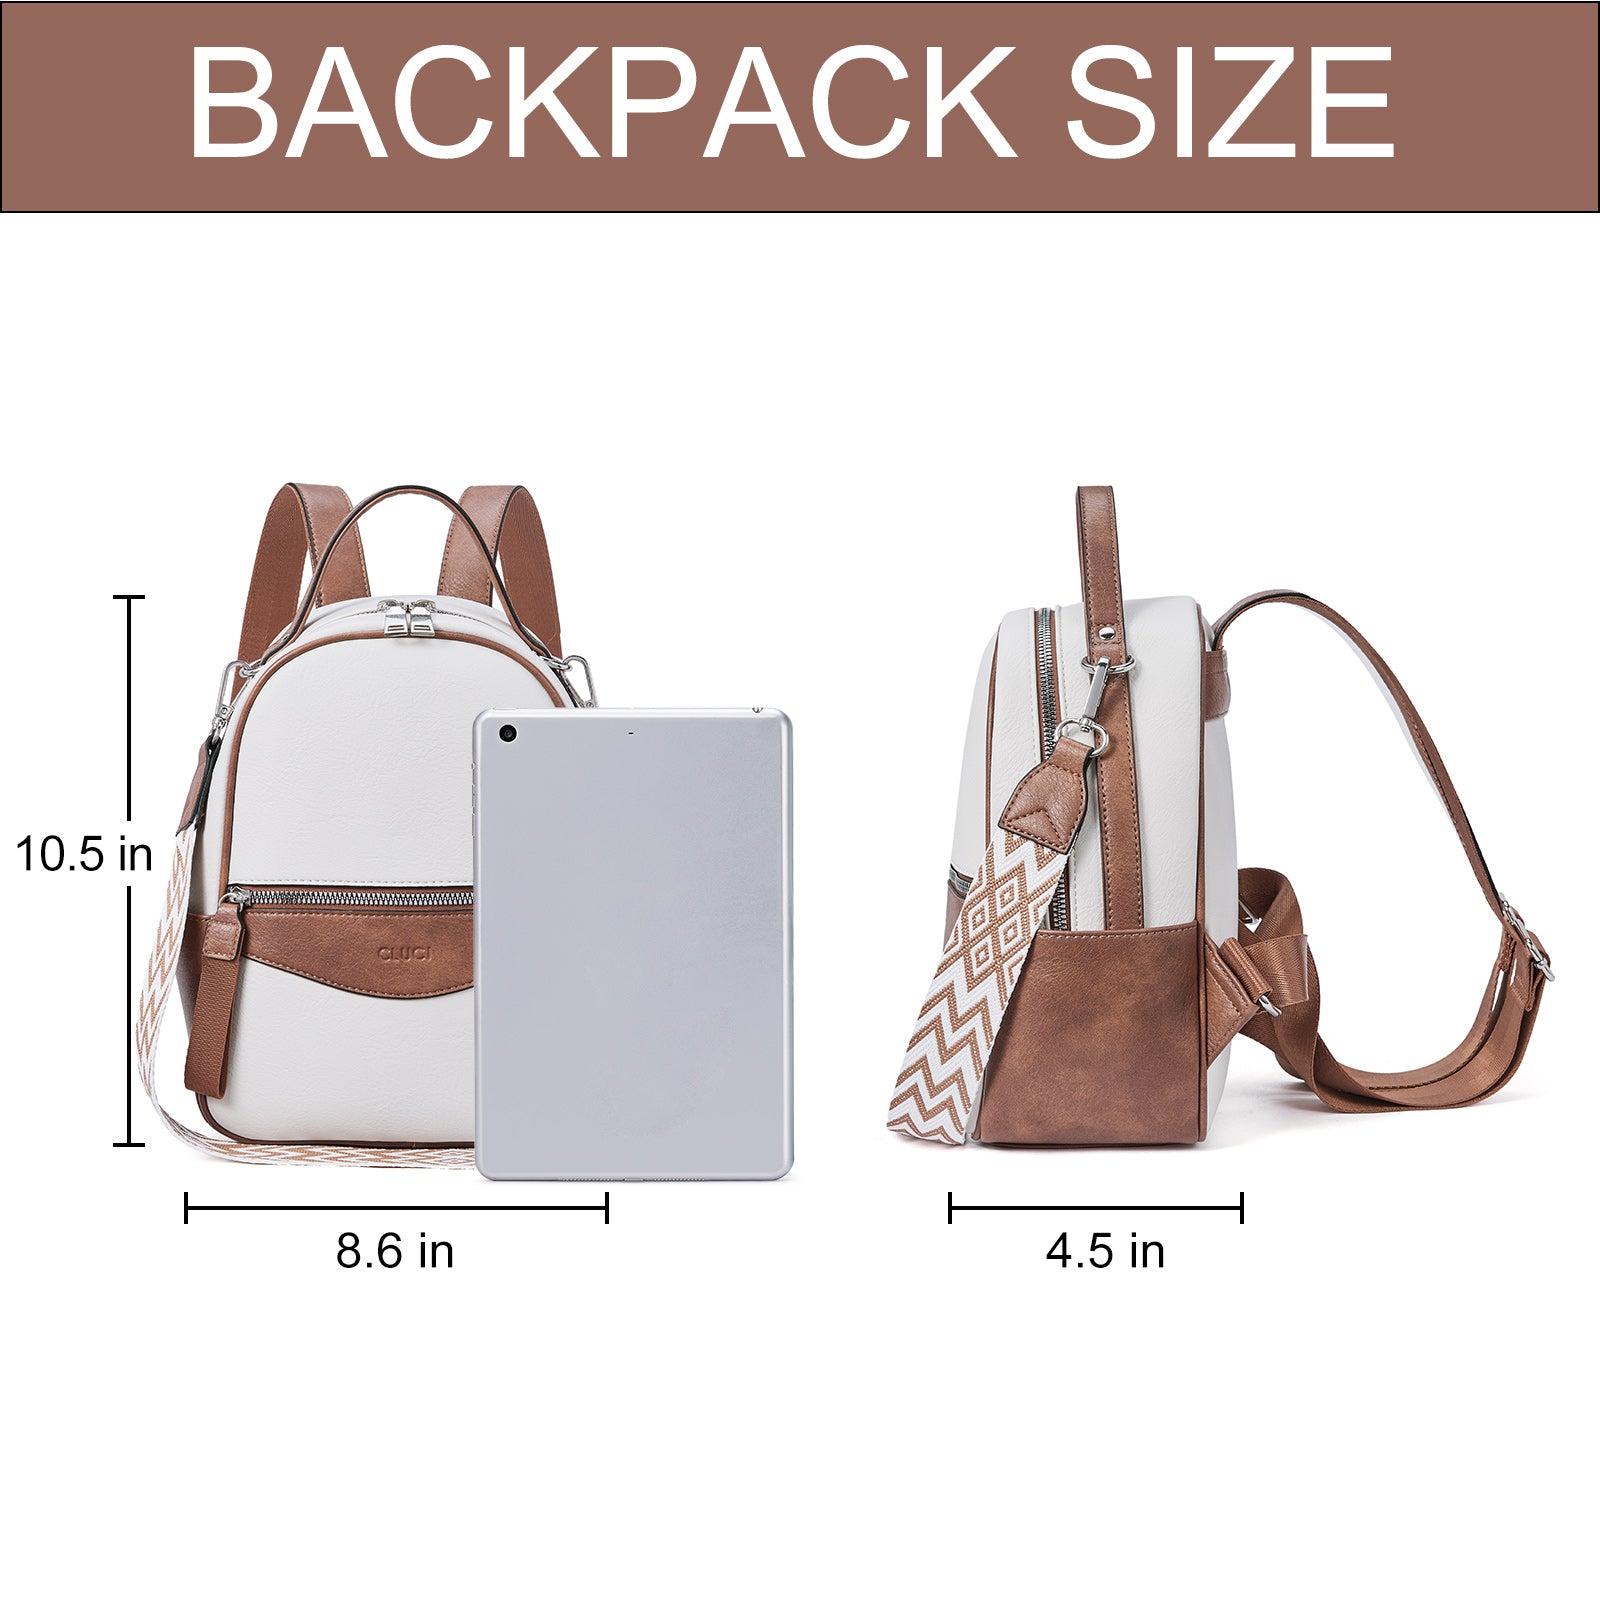 CLUCI Mini Backpack Purse for Women Shoulder Backpack Convertible Handbags